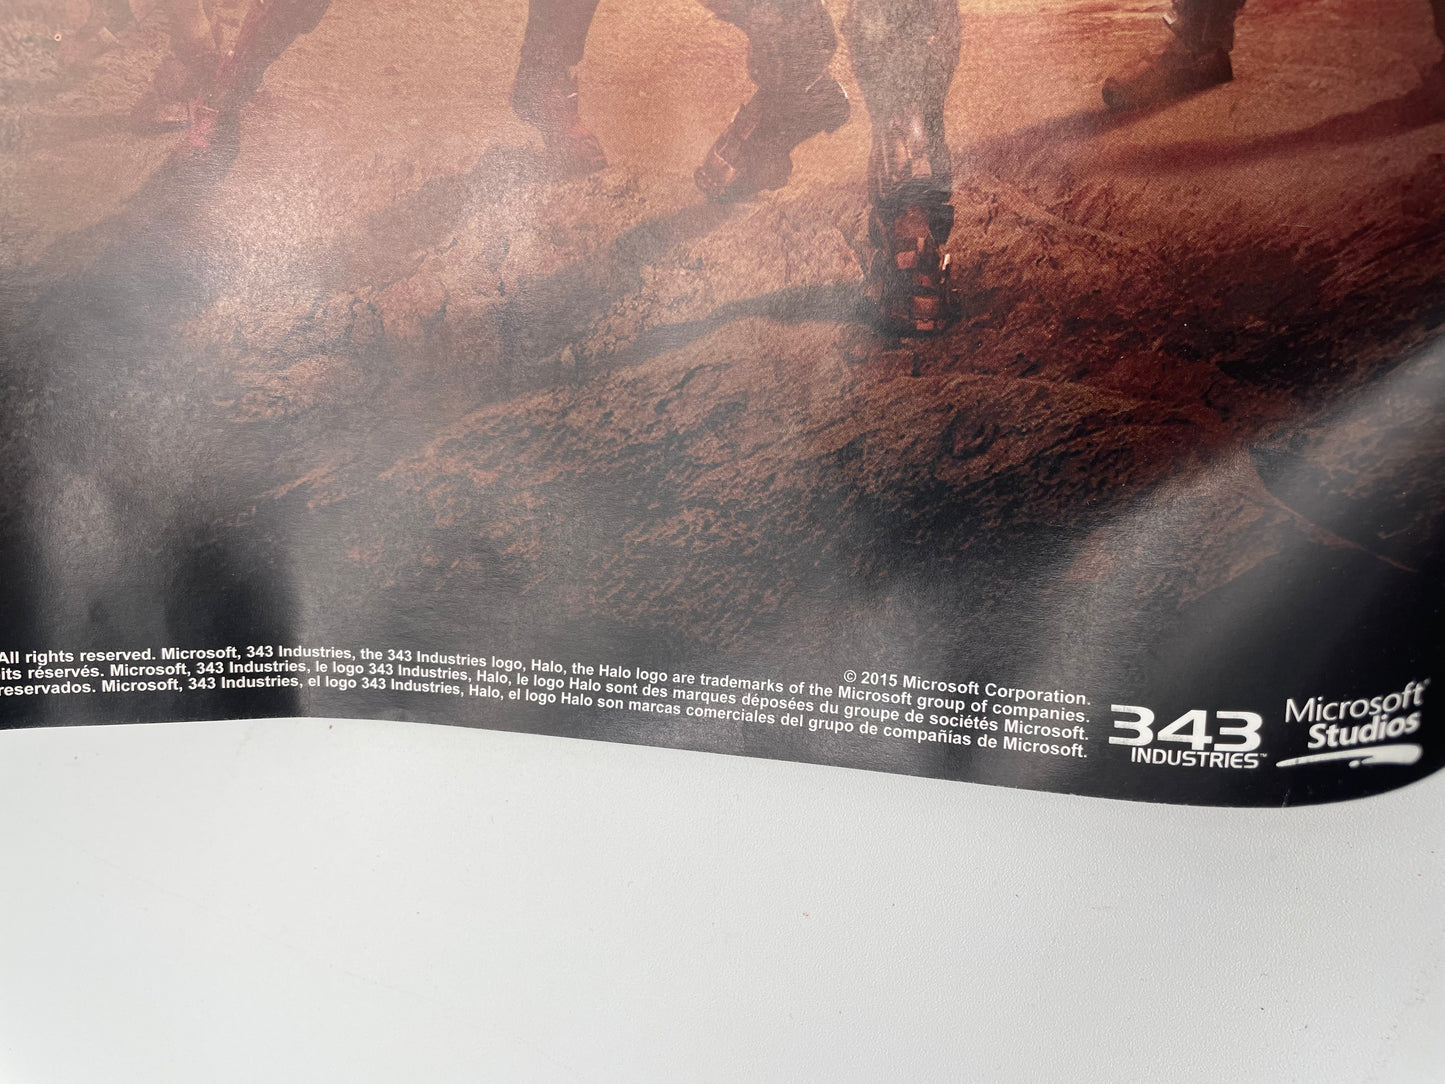 Halo 5 - Guardians Poster (Horizontal) 2015 #103792